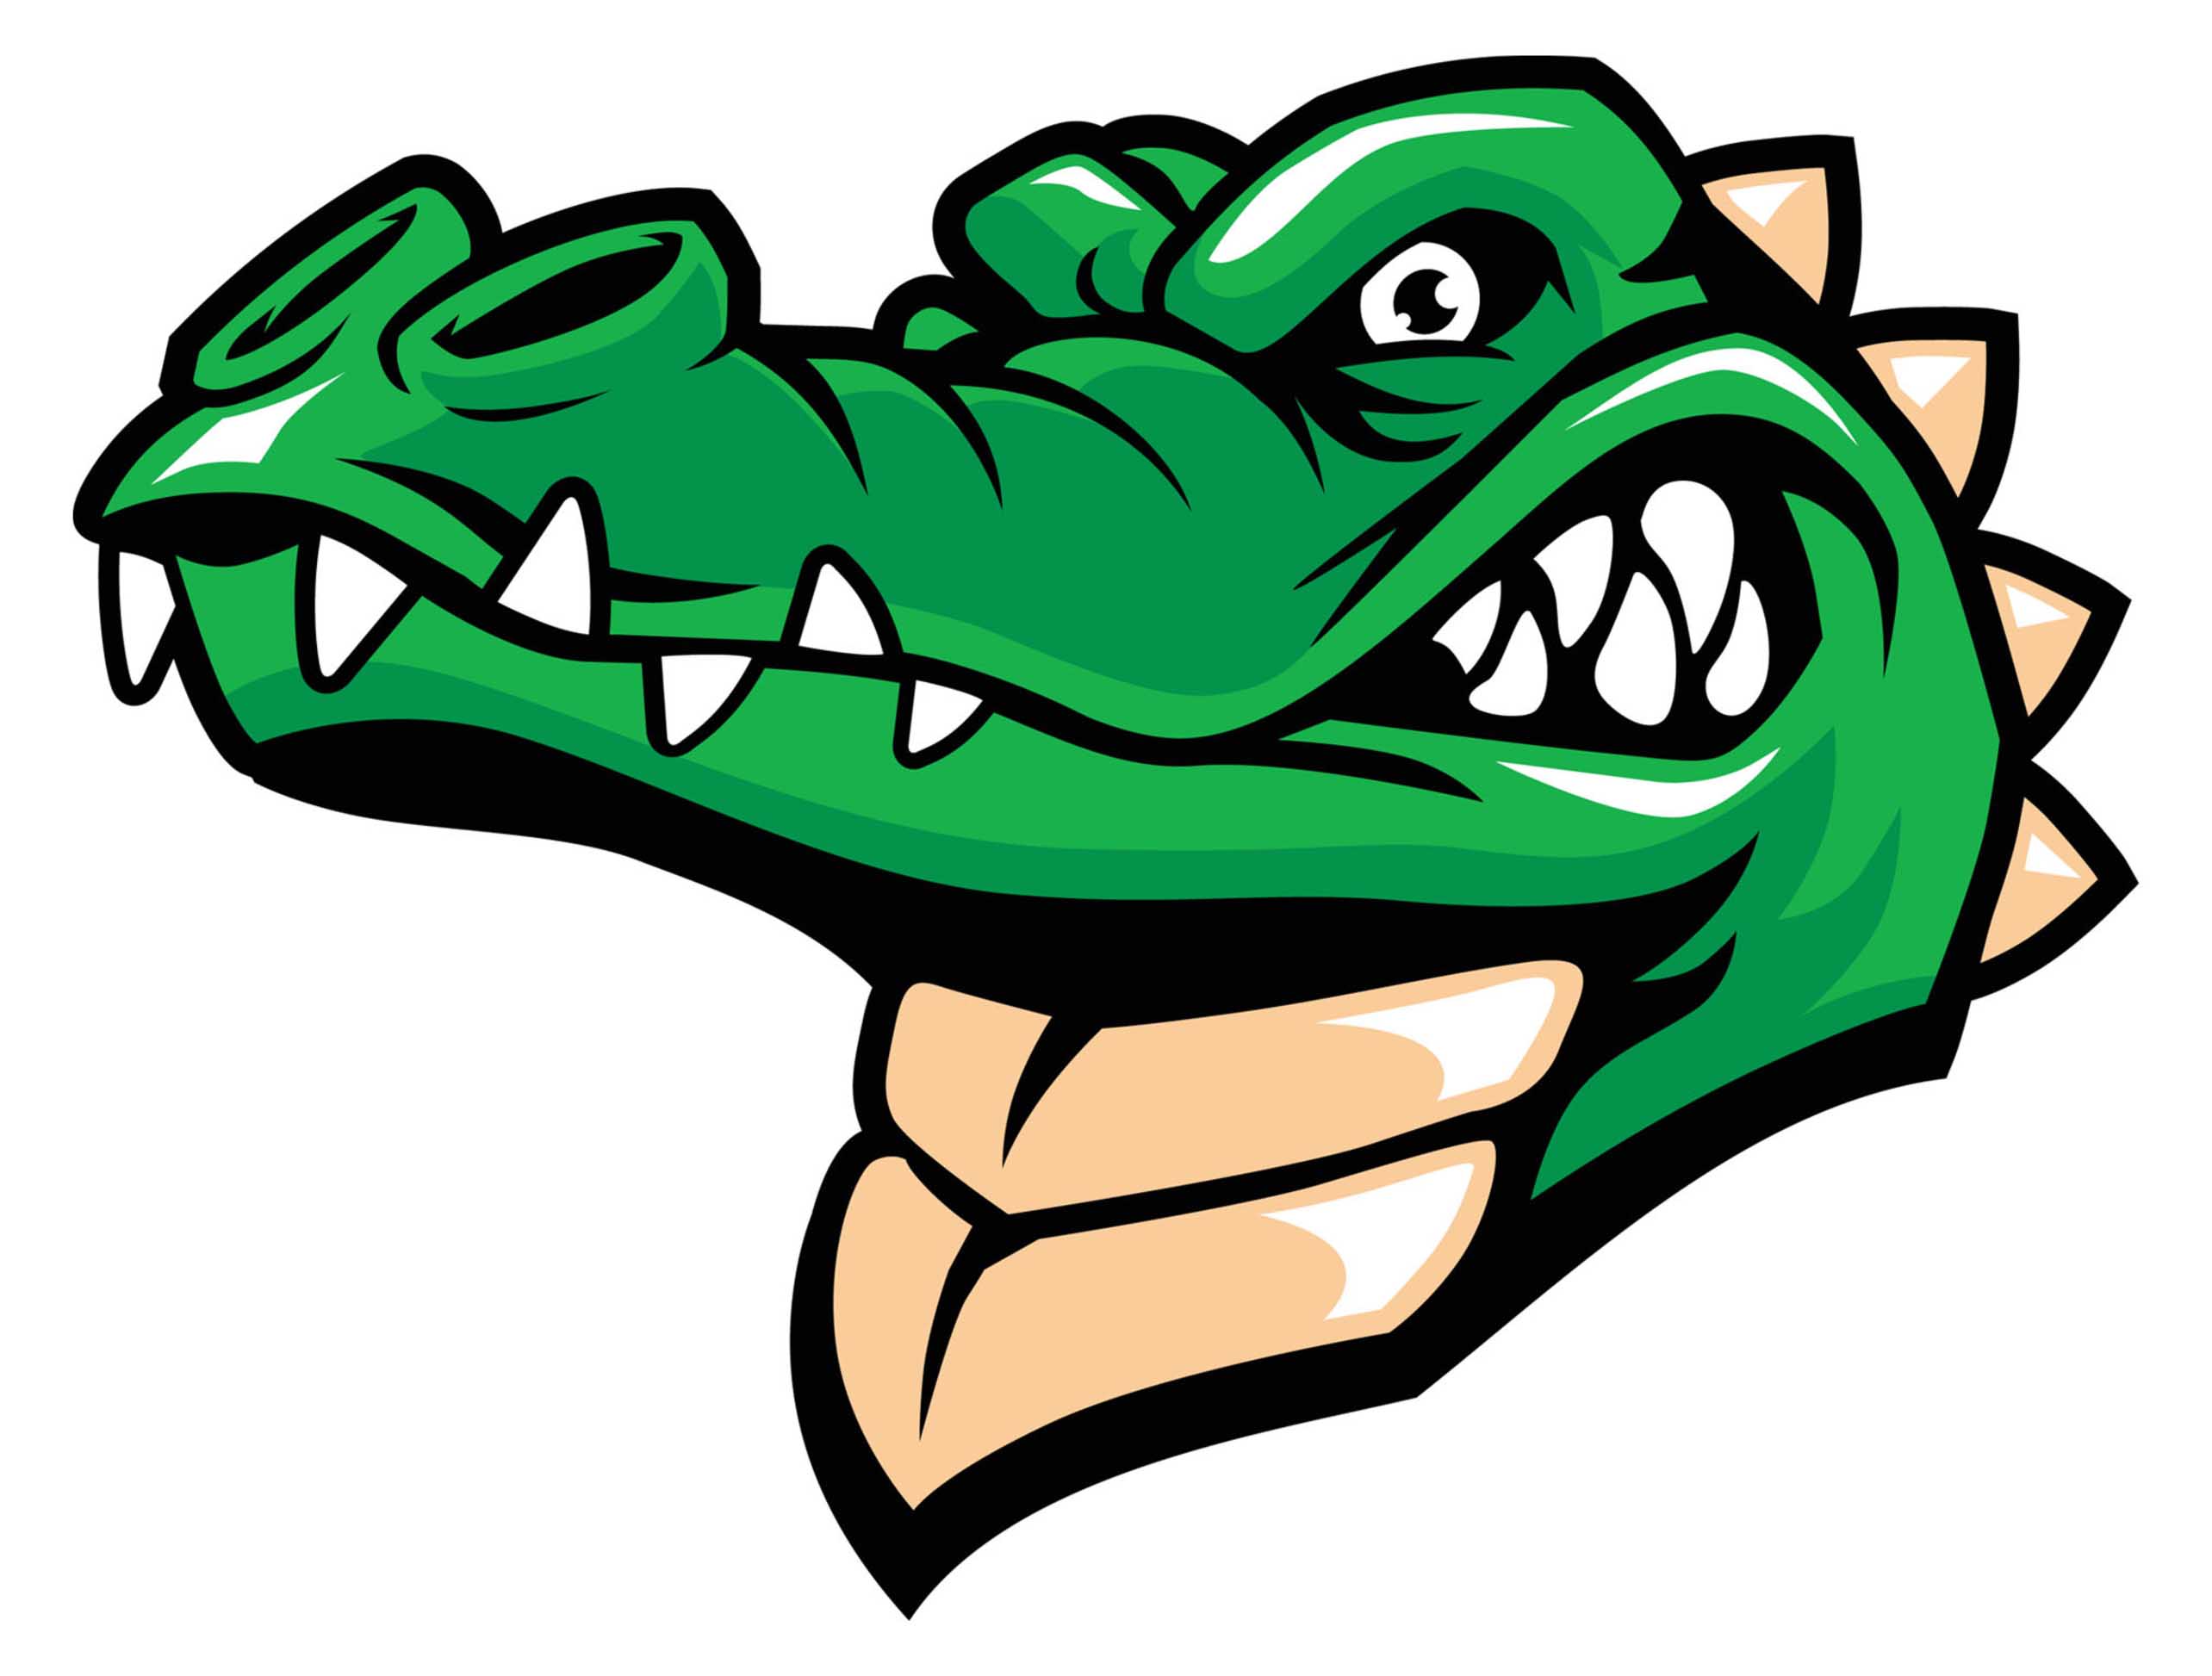 green alligator logo